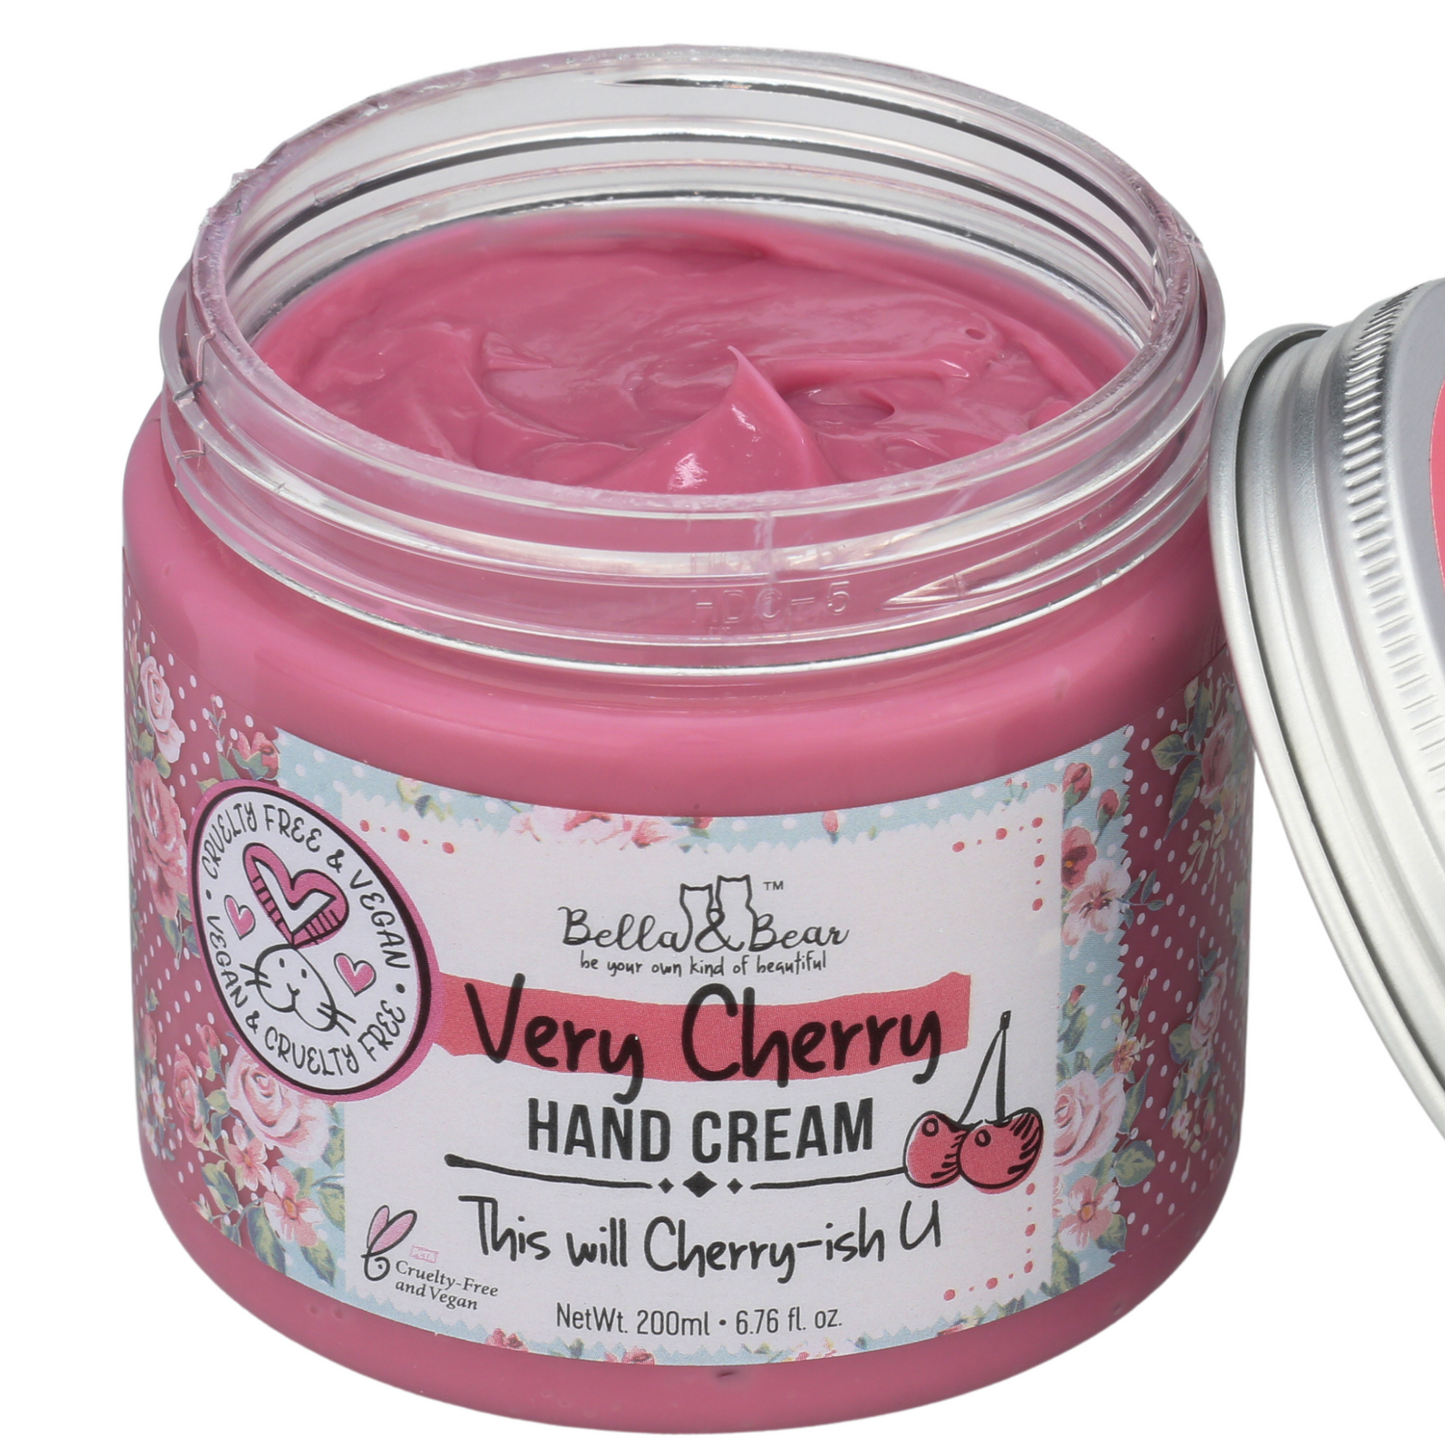 Bella & Bear - Very Cherry Hand Cream 6.7oz